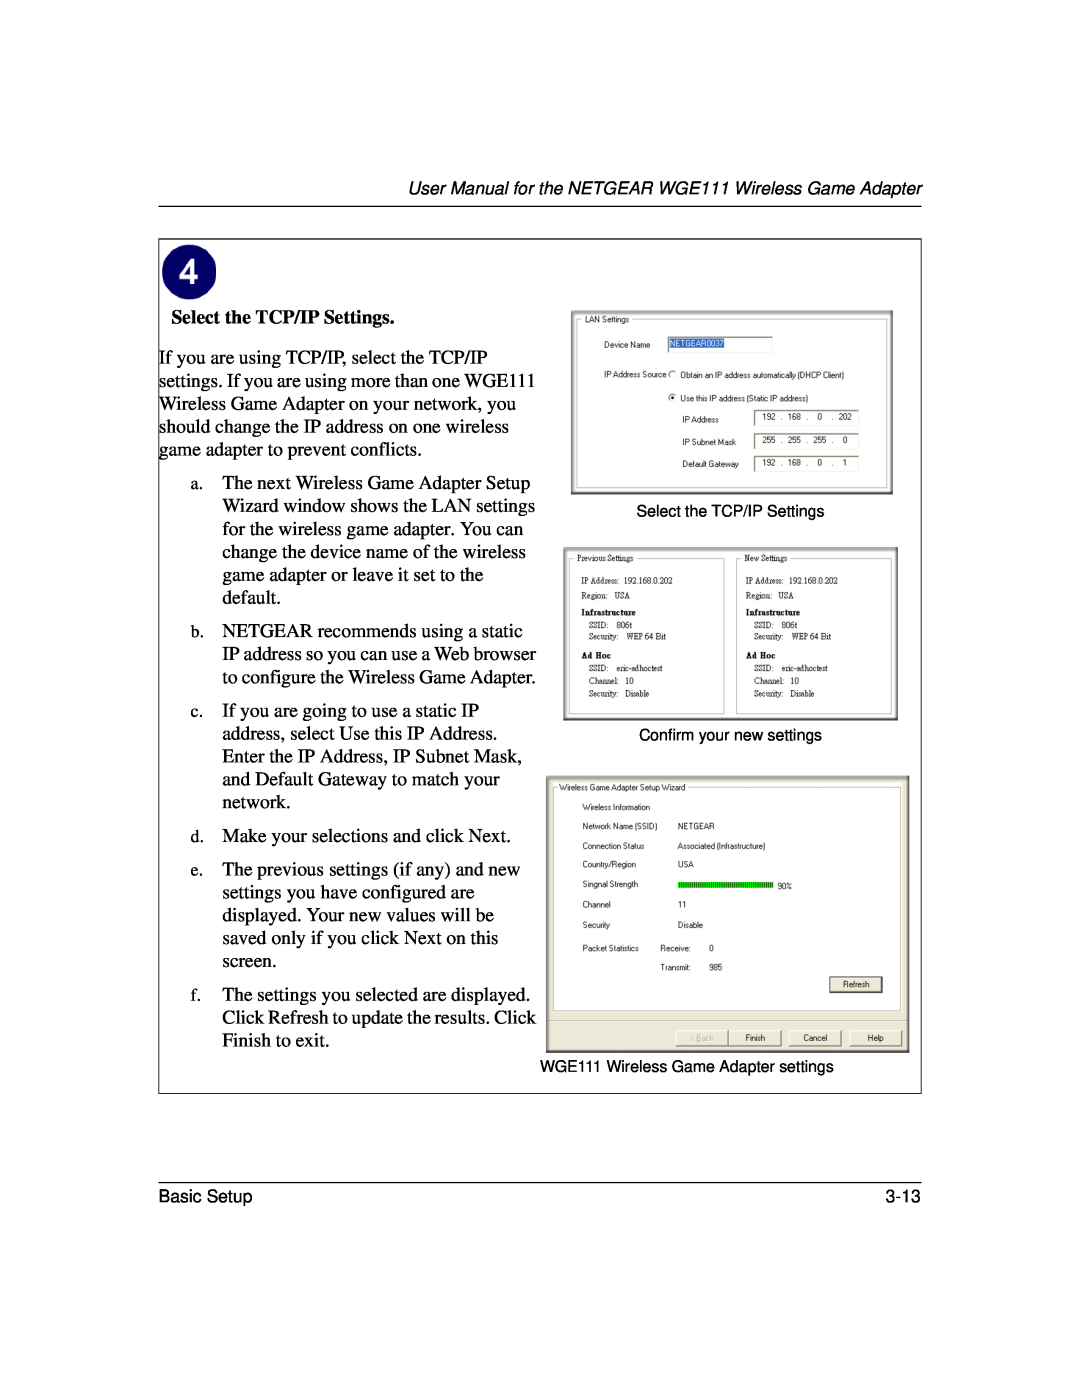 NETGEAR WGE111 user manual Select the TCP/IP Settings 